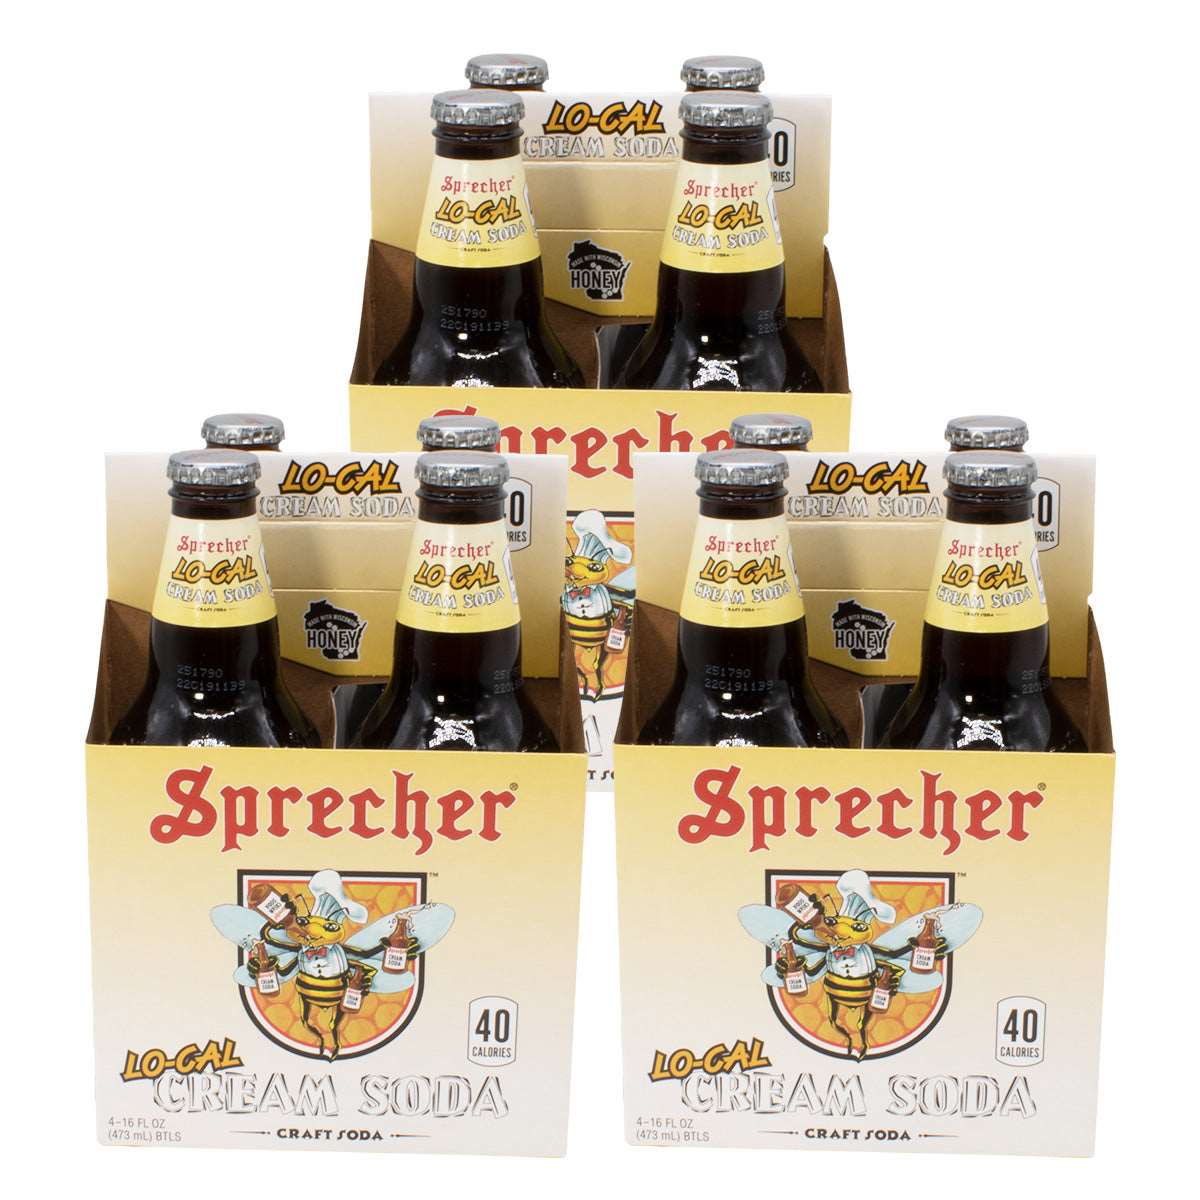 3 4-packs of Sprecher Lo-Cal Cream Soda